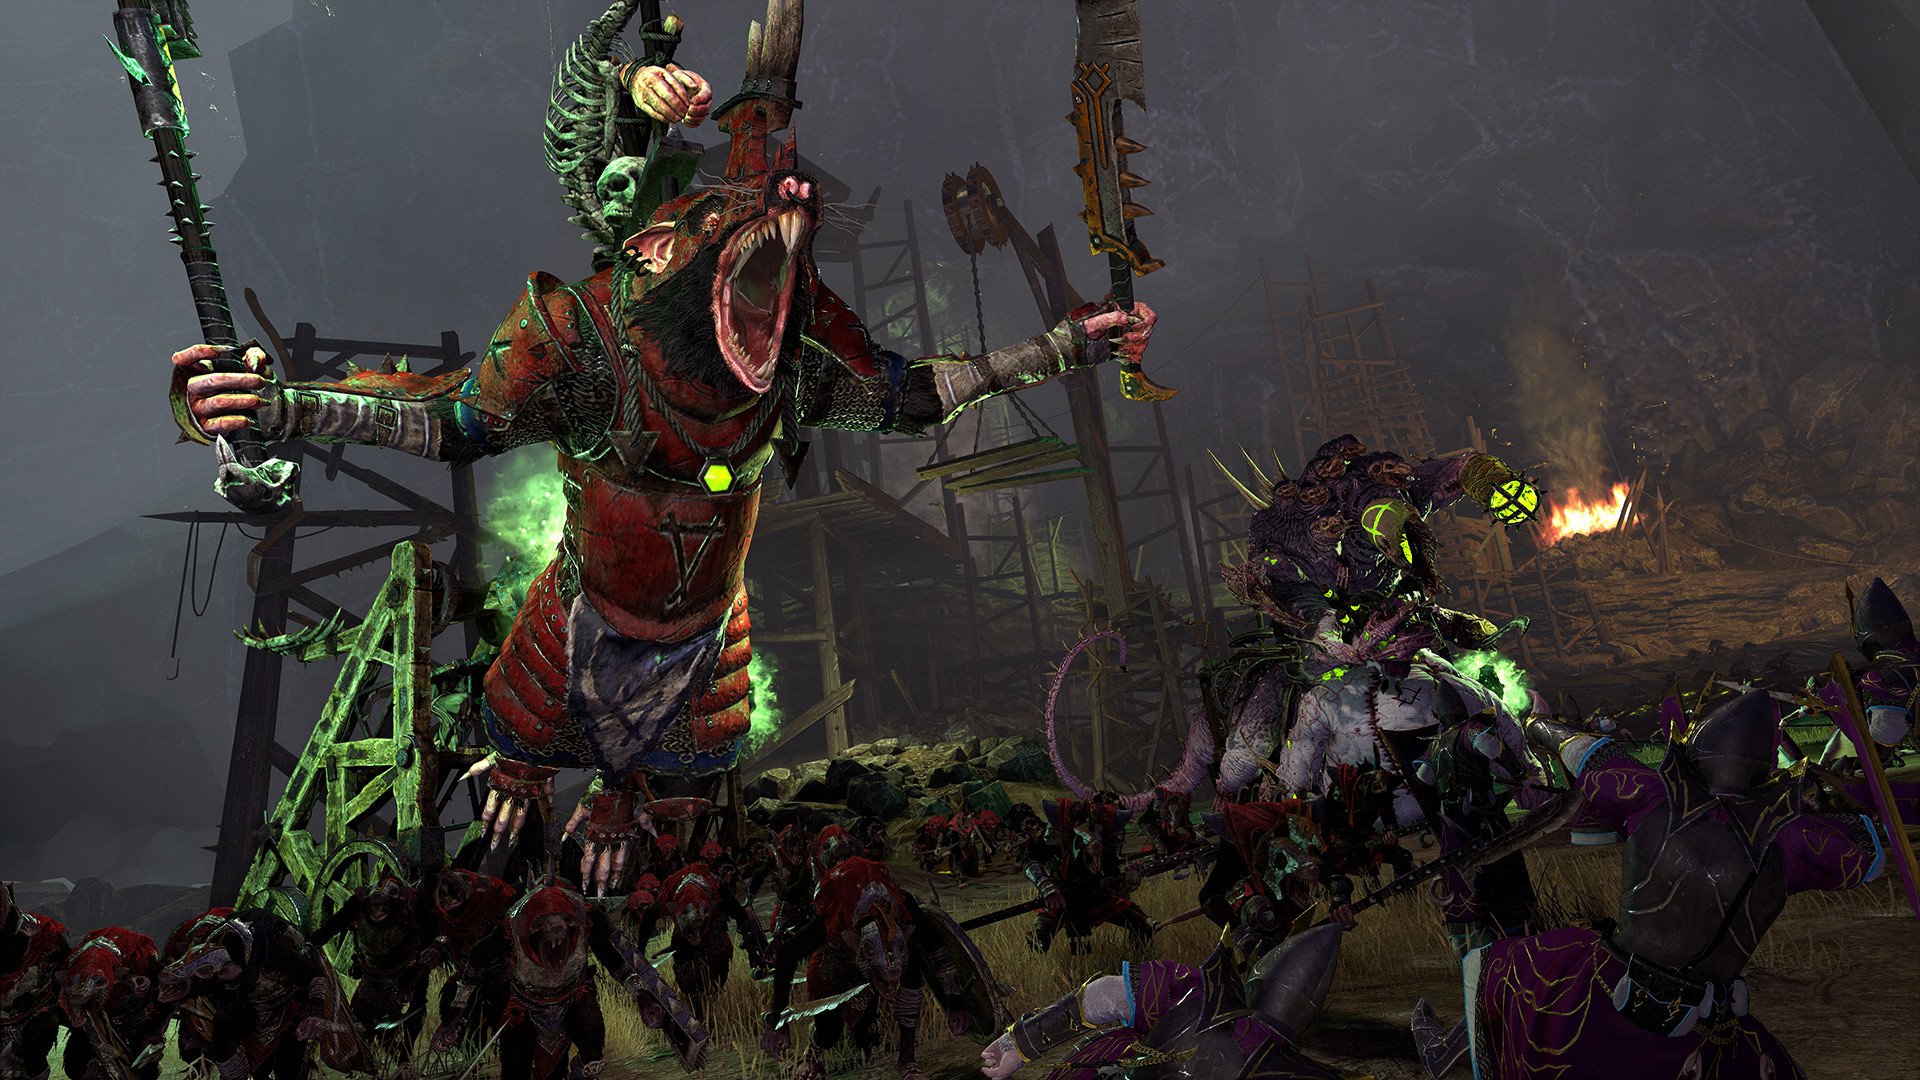 Best Total War games - Skaven army from Total War: Warhammer 2